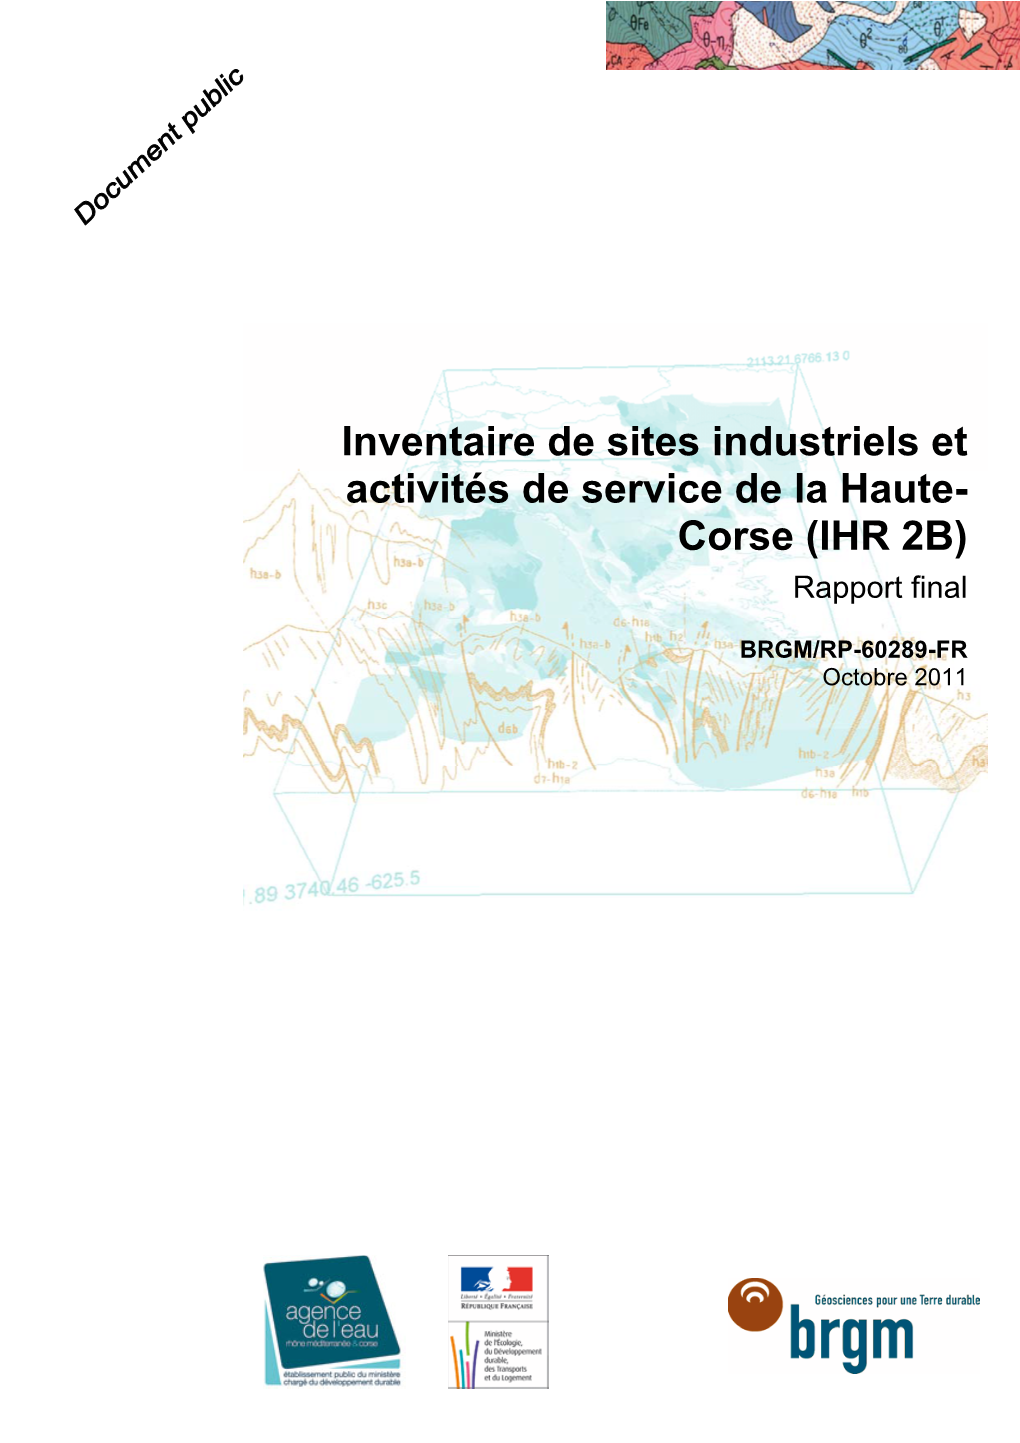 Corse (IHR 2B) Rapport Final